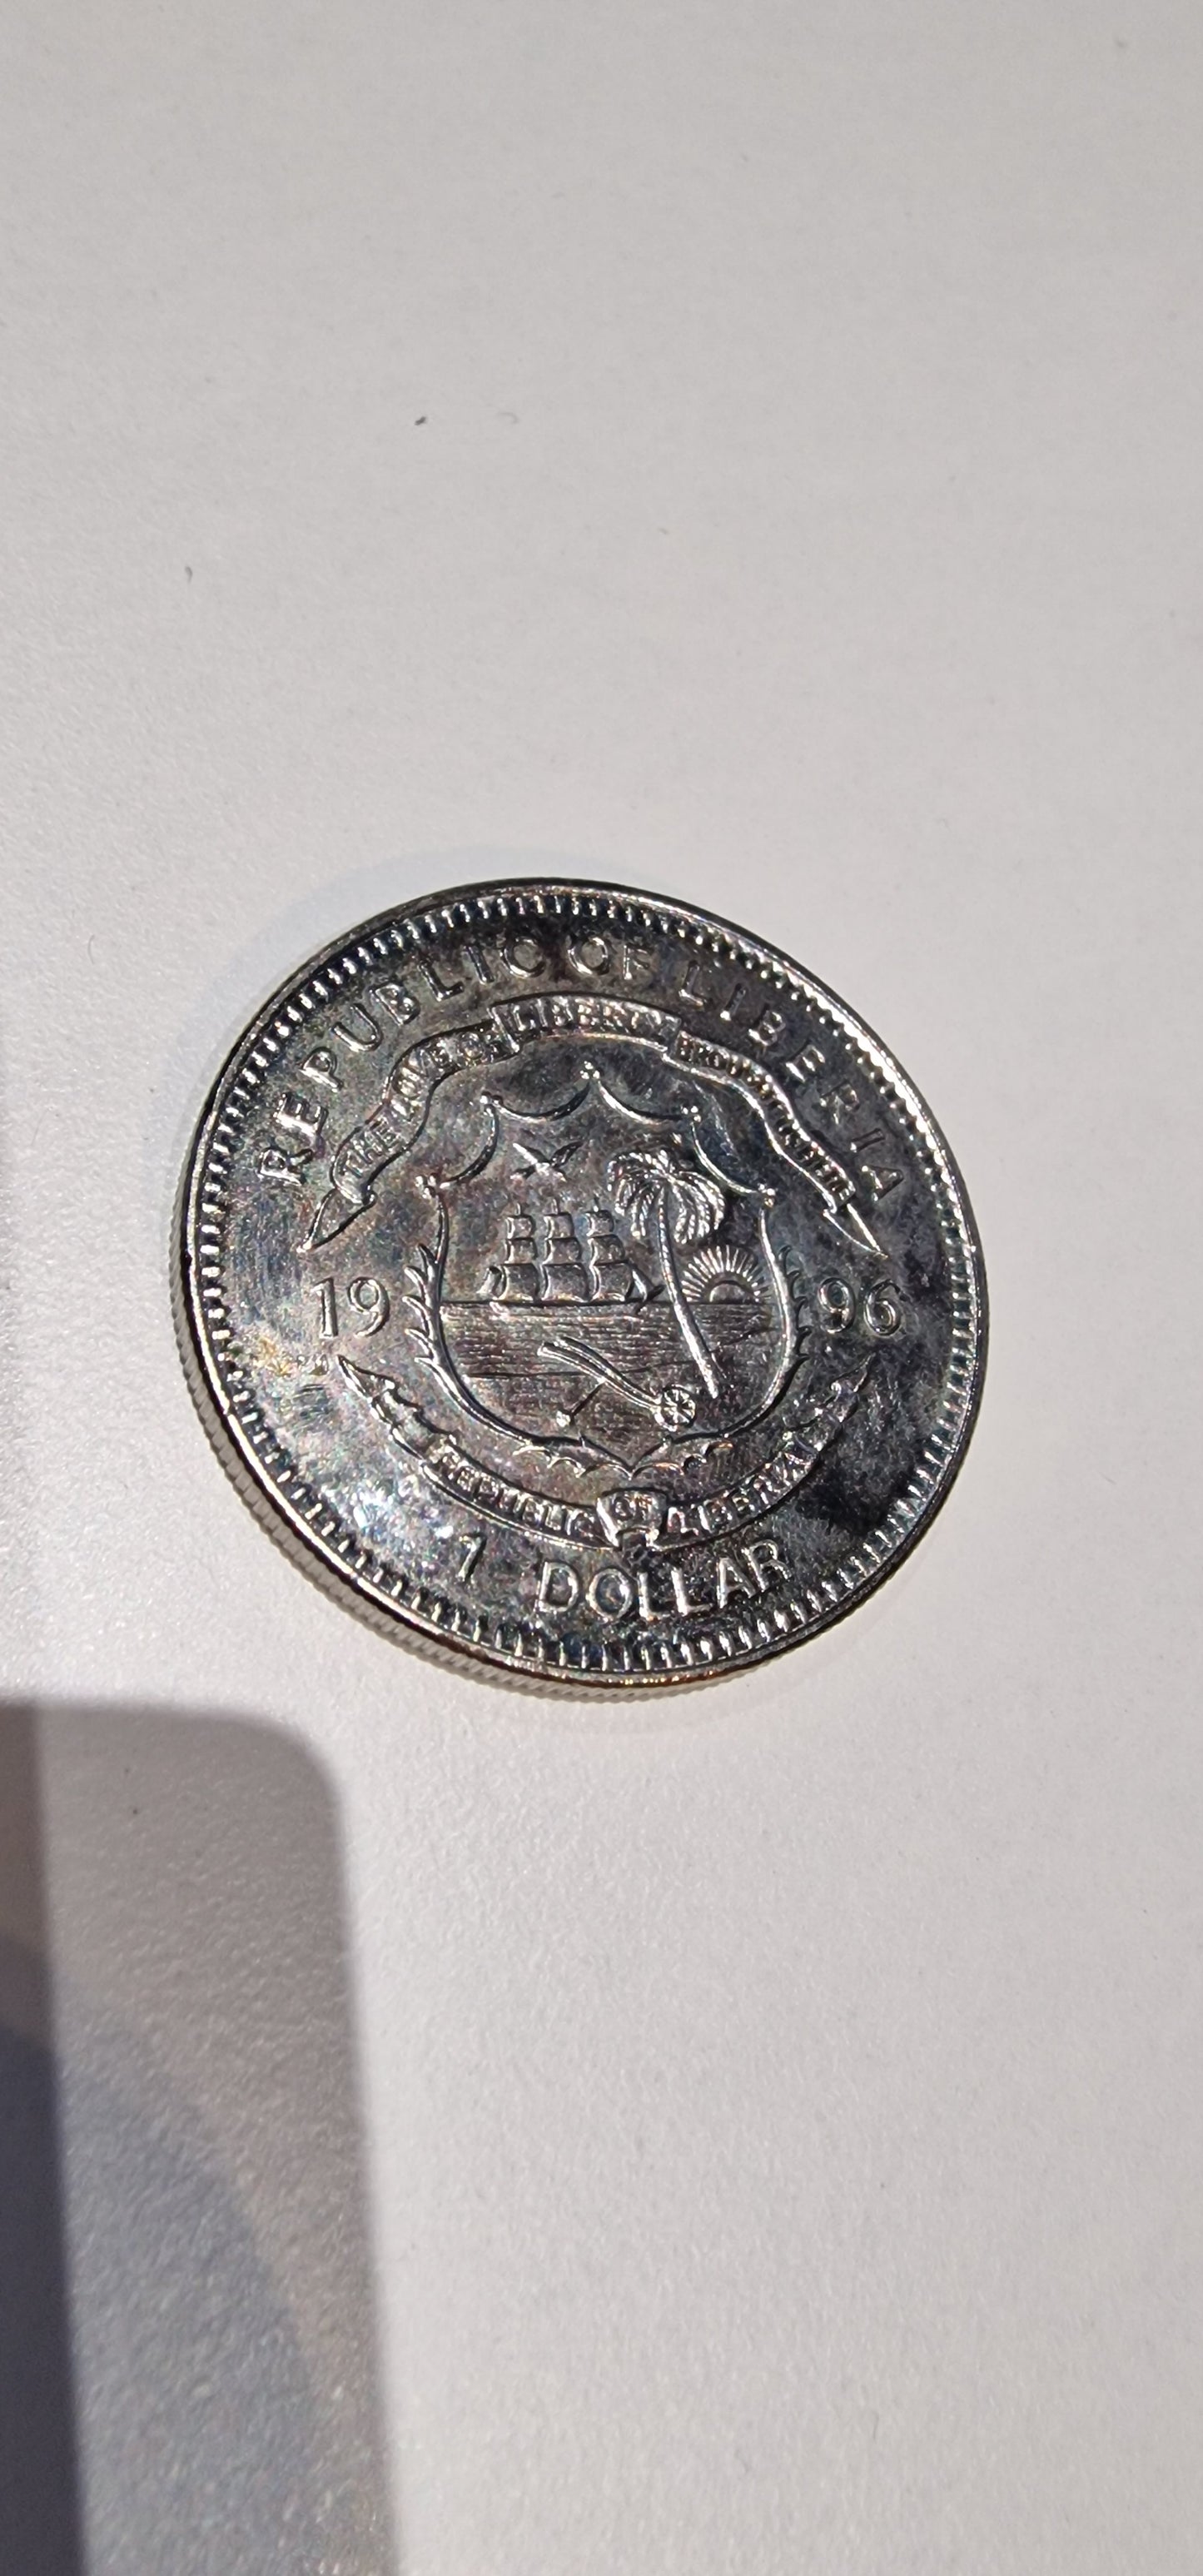 Liberian $1